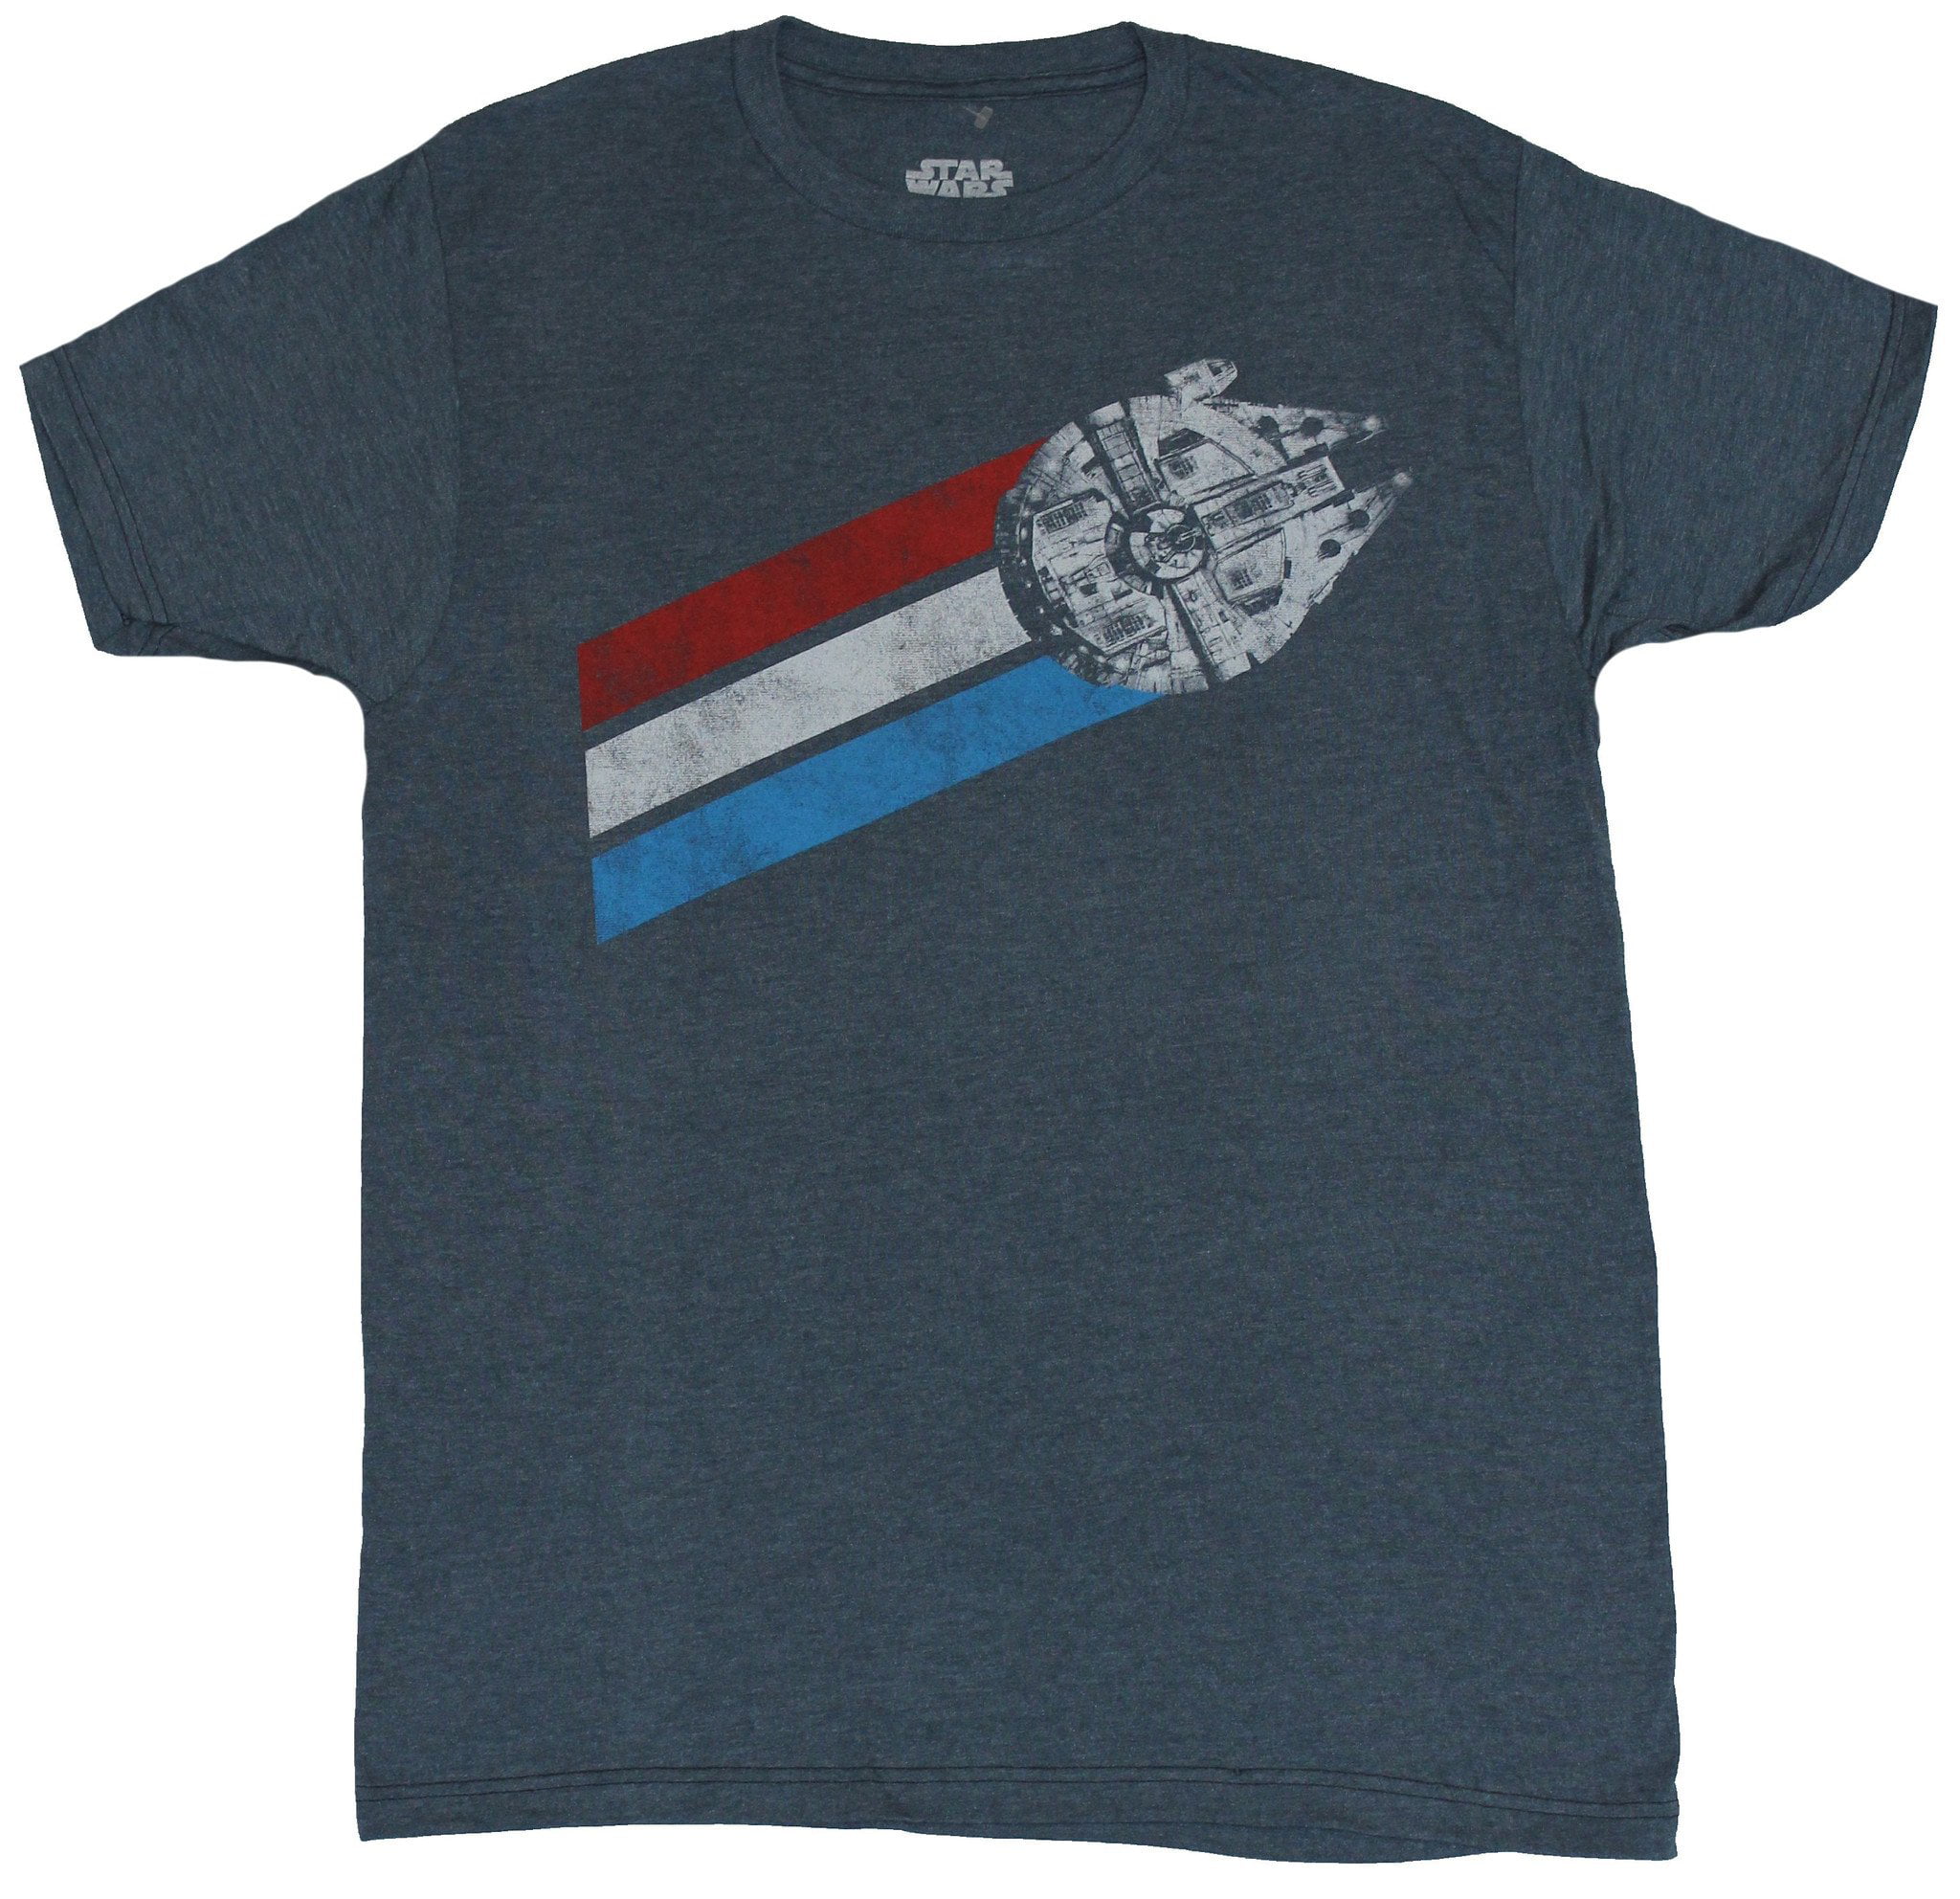 Star Wars Millennium Falcon X-Wing Ships Tee Shirt T-shirt